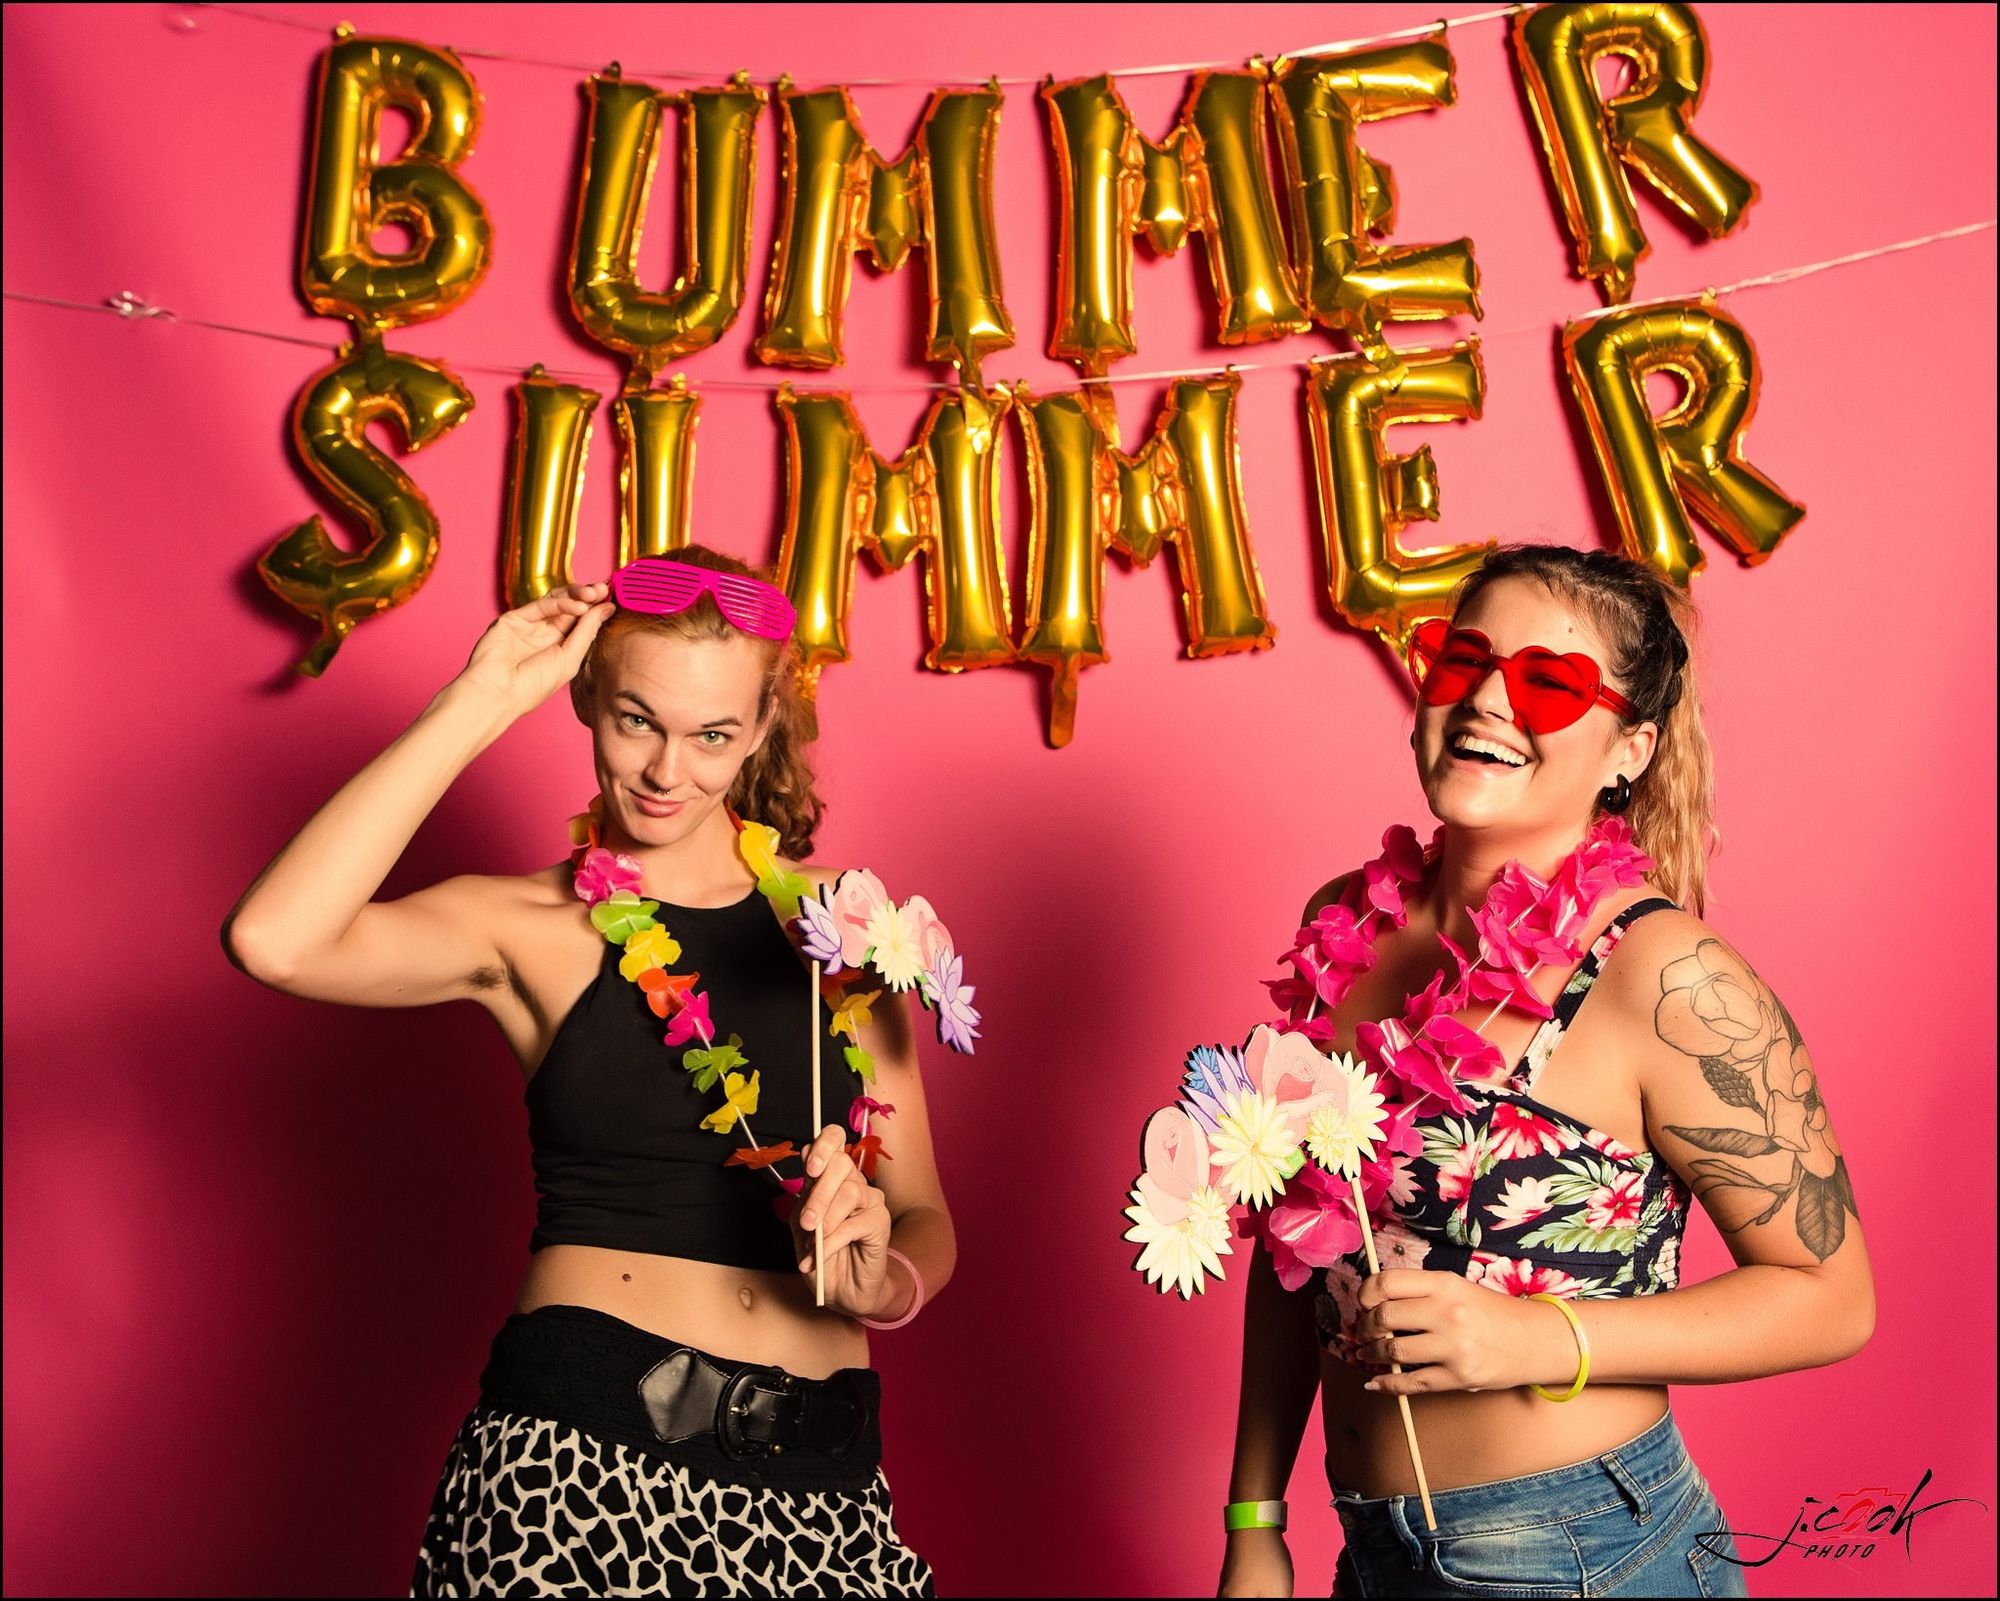 Beginning of Summer Beach Bummer ll: Still Bummin' hosted at Chizuko costume contestants in 2019